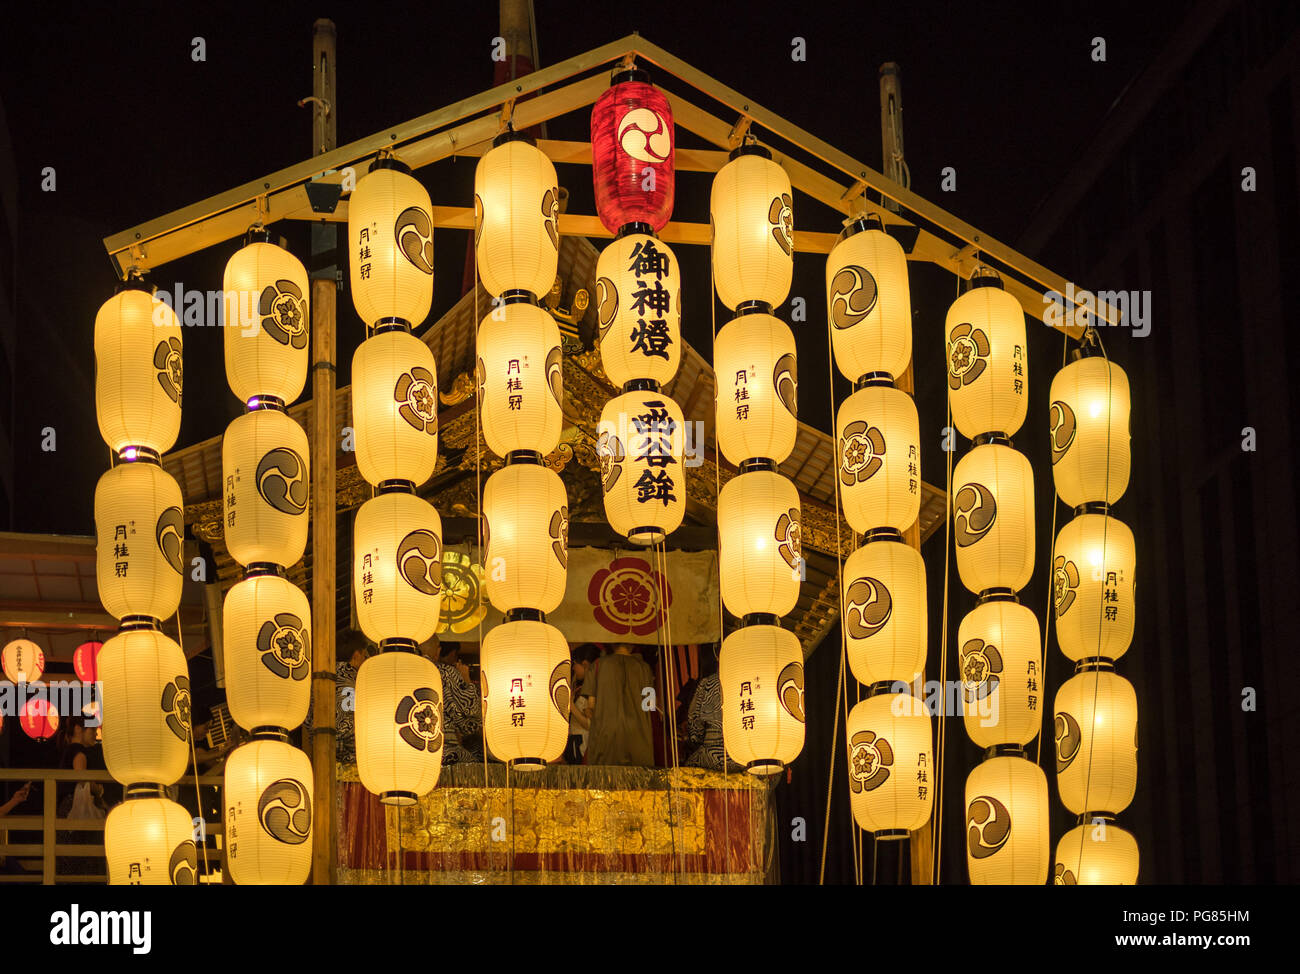 The impressive lit paper lanterns of the Yamaboko floats at the Yoiyama (Yoiyoiyama) street party during the 2018 Gion Matsuri Festival. Kyoto, Japan. Stock Photo